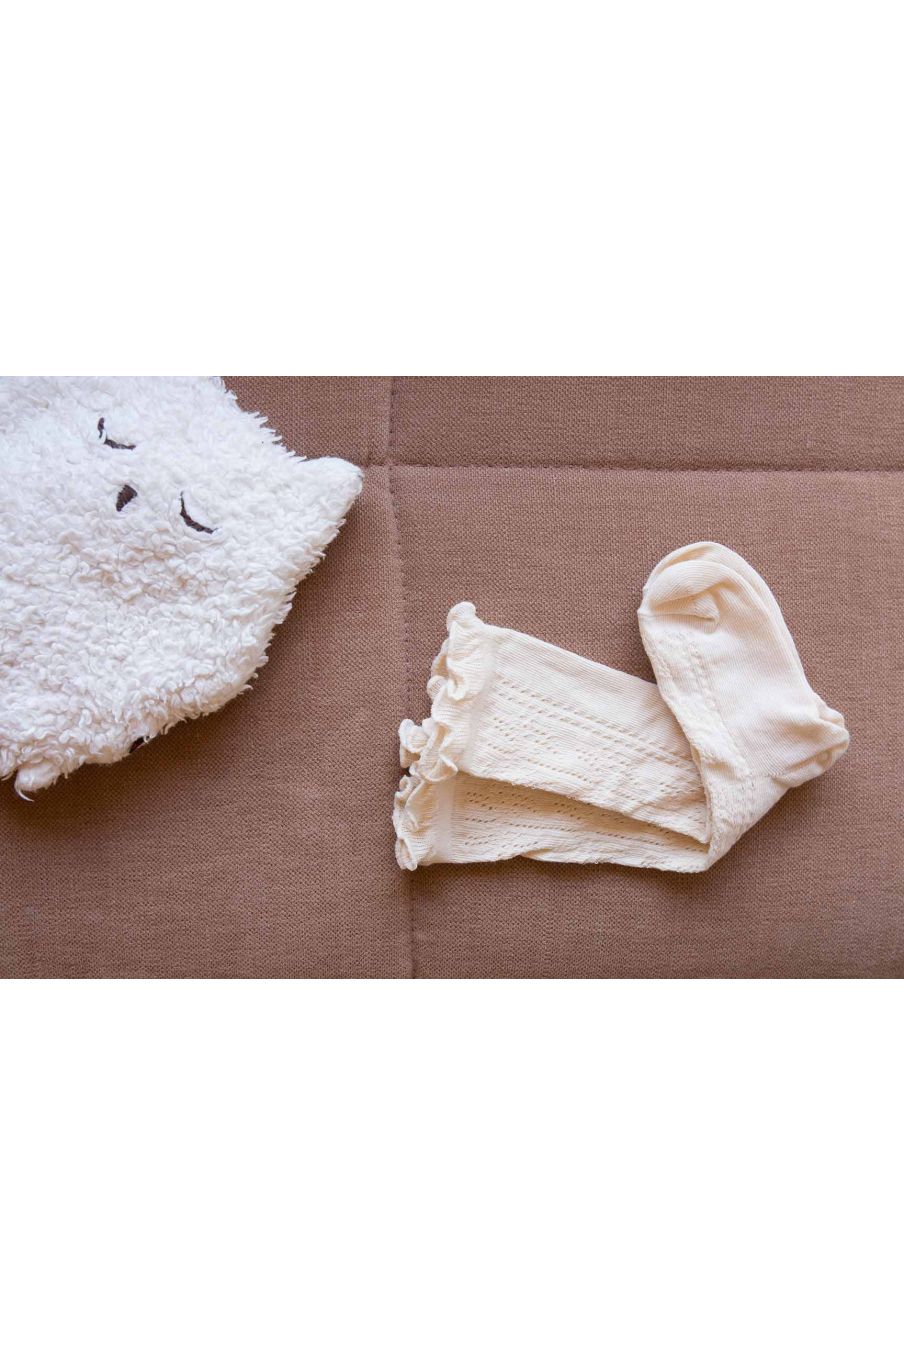 Baby Boys & Girls White Cotton Socks